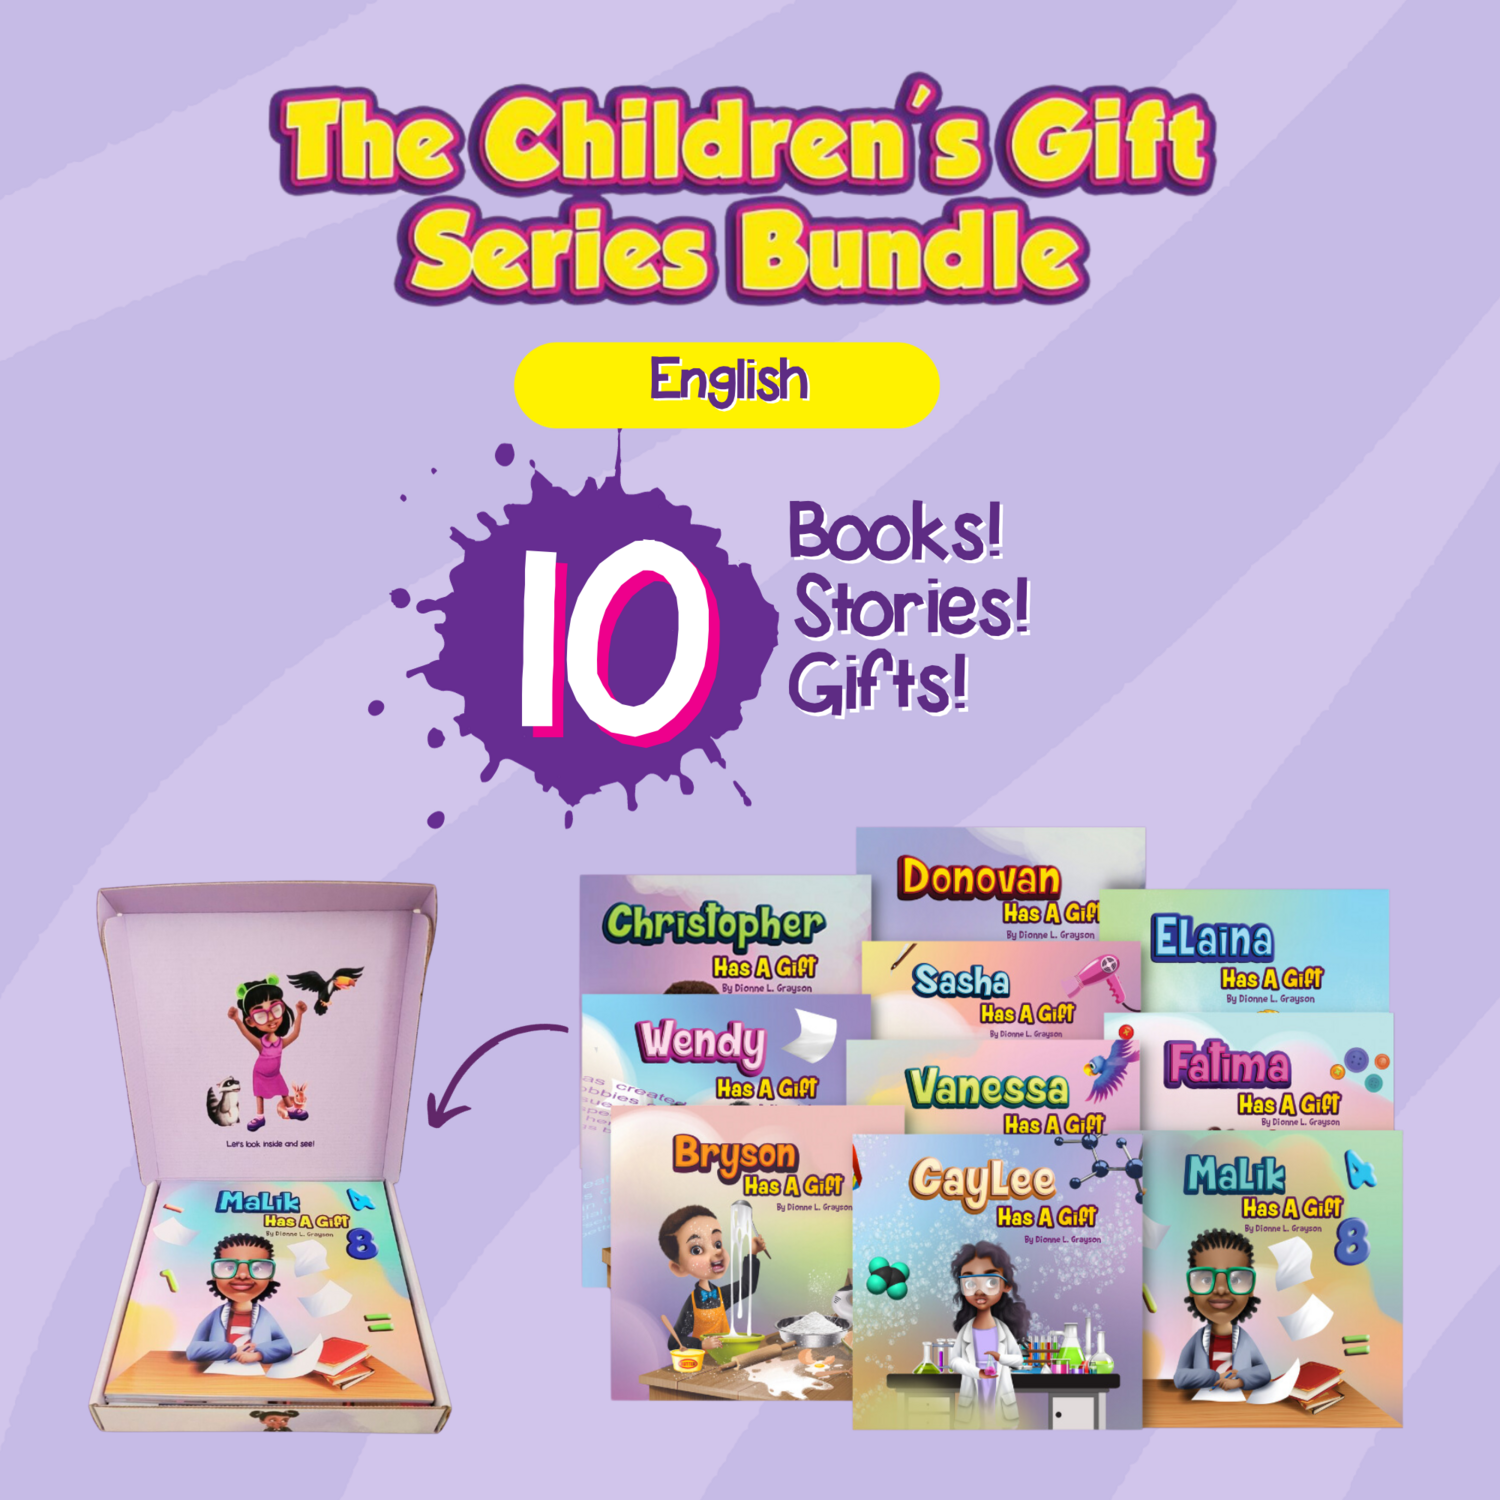 The Children's Gift Series